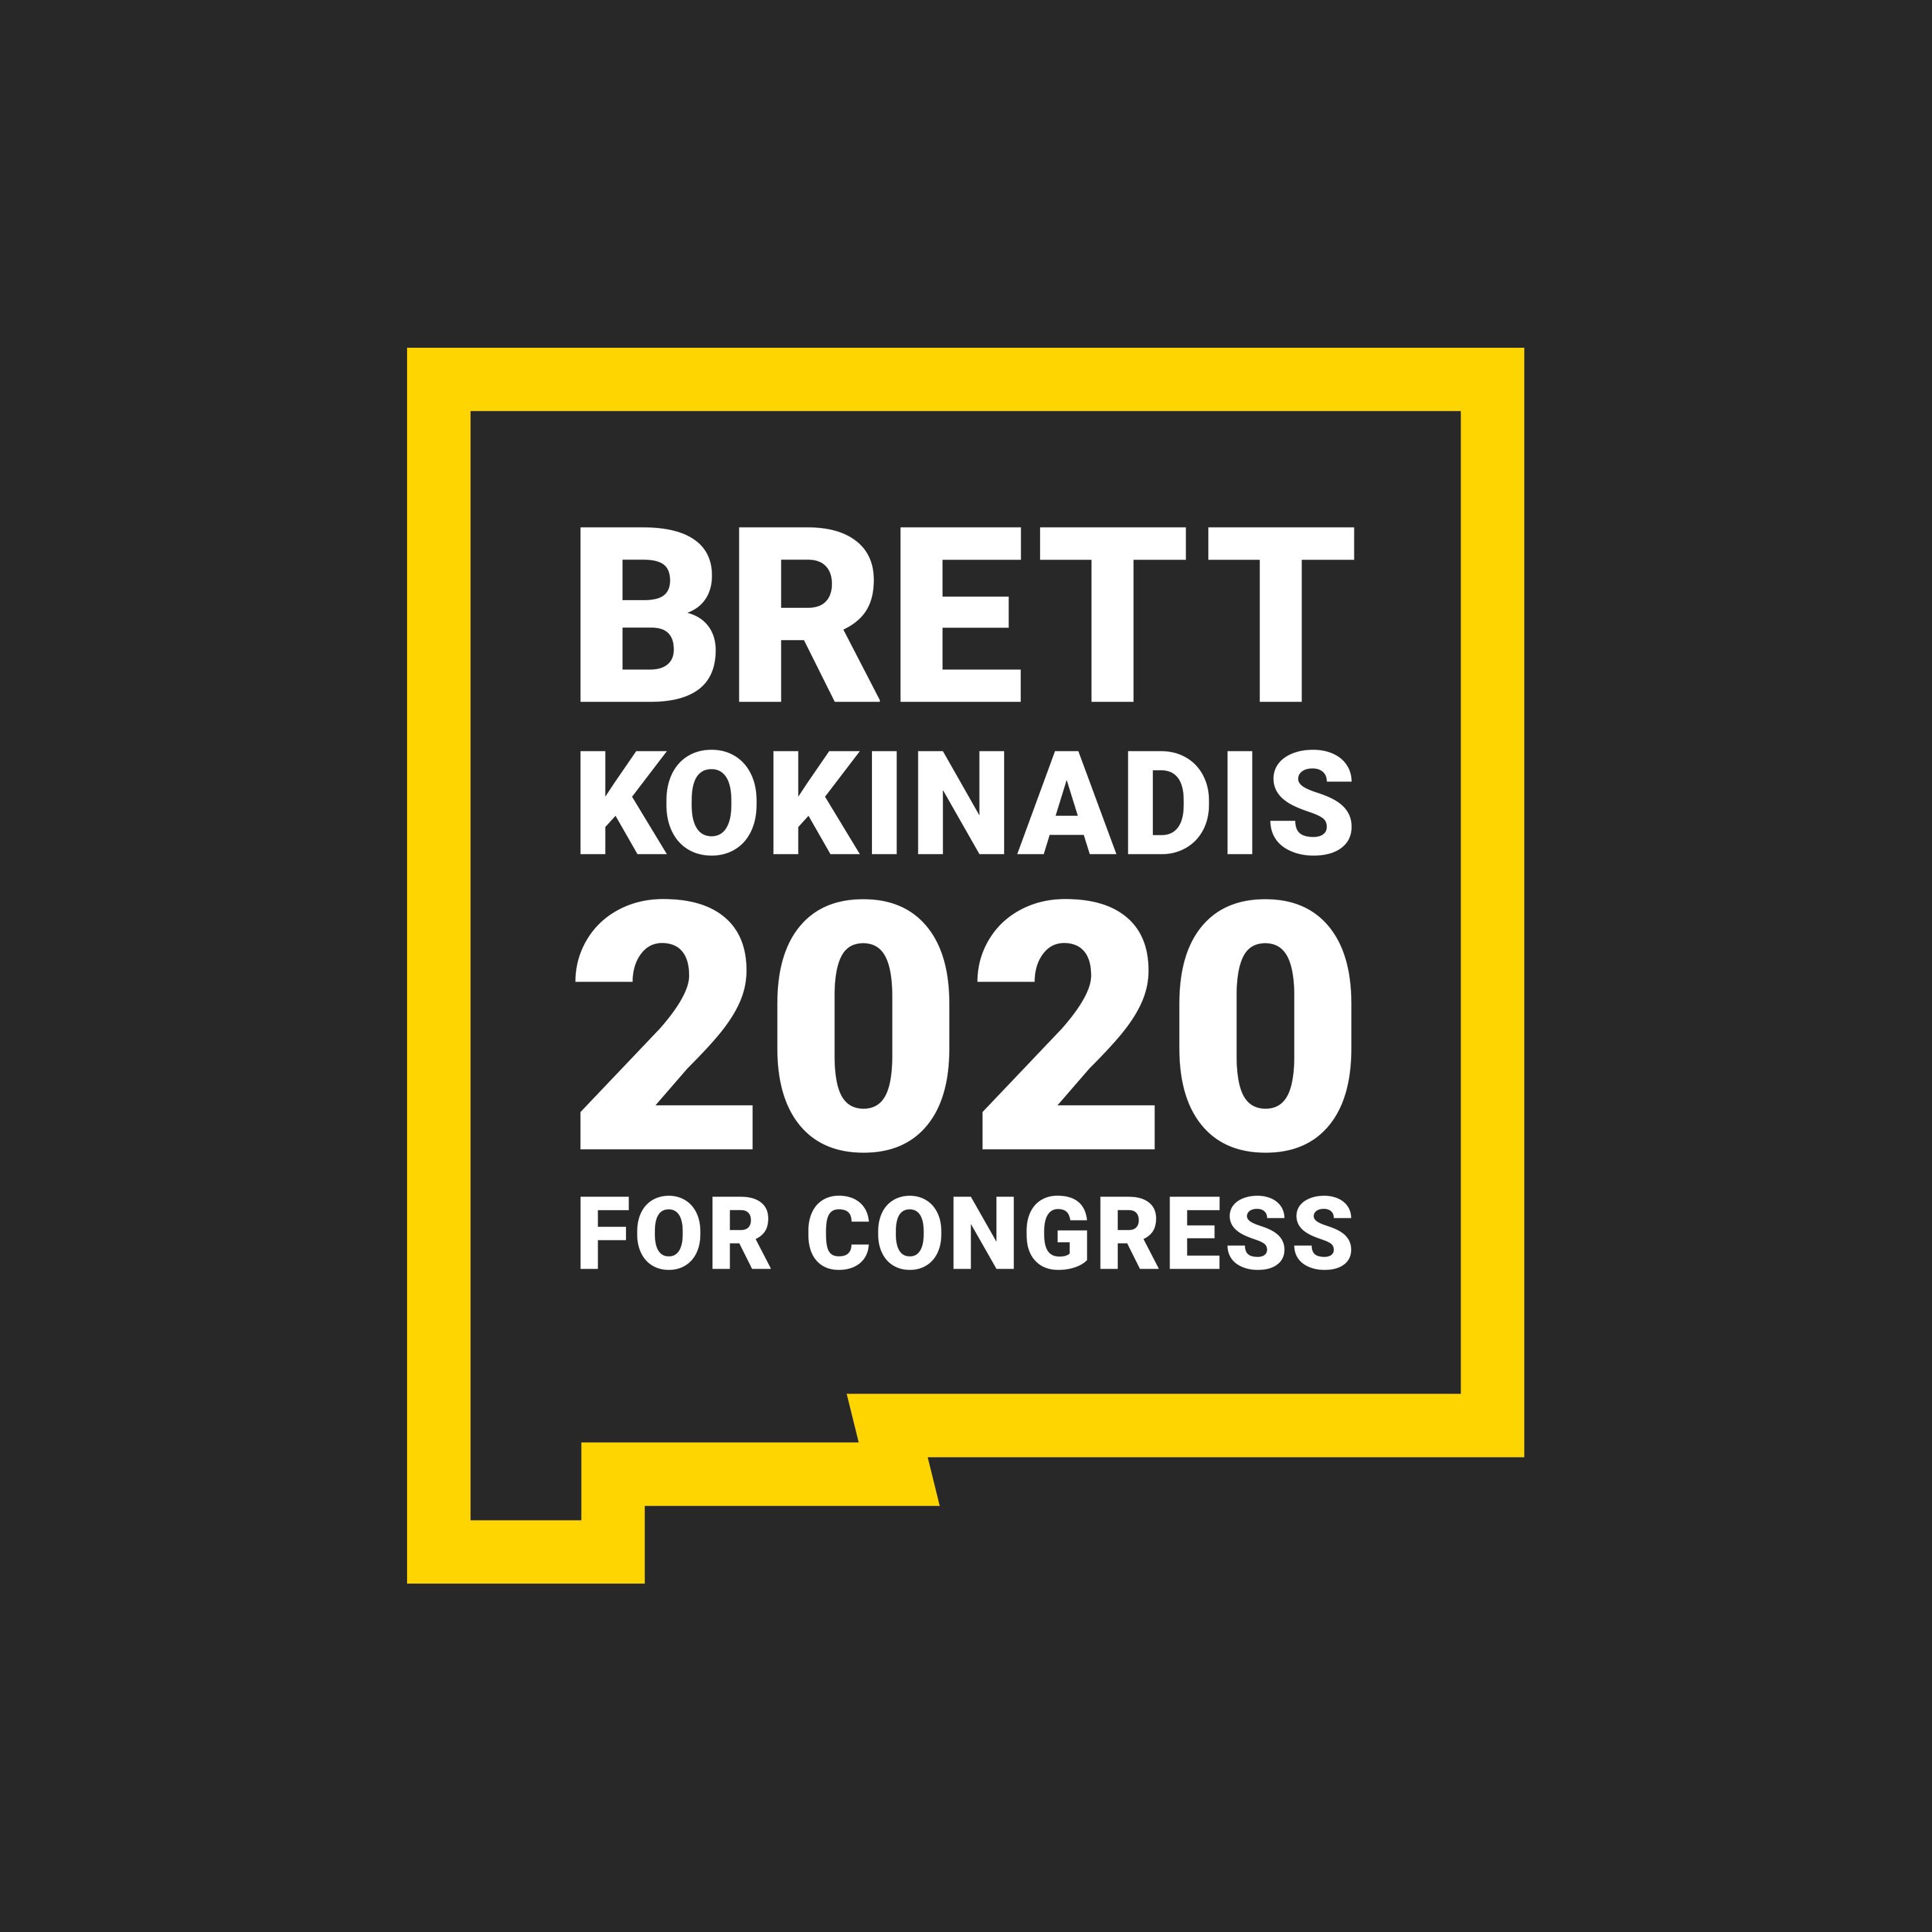 Brett Kokinadis for Congress